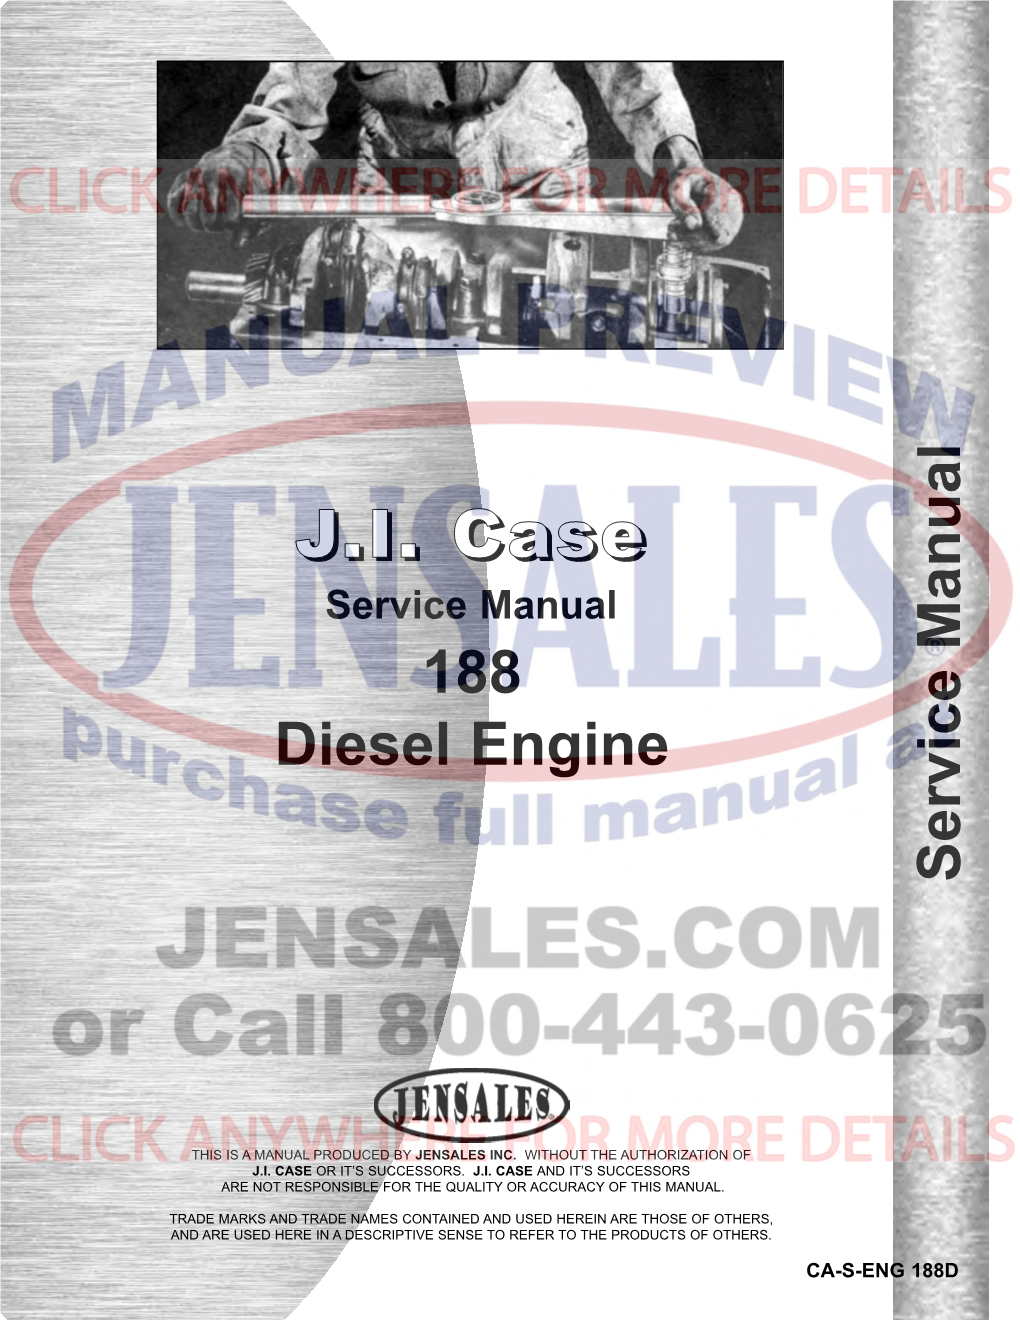 Case 188D Engine Service Manual